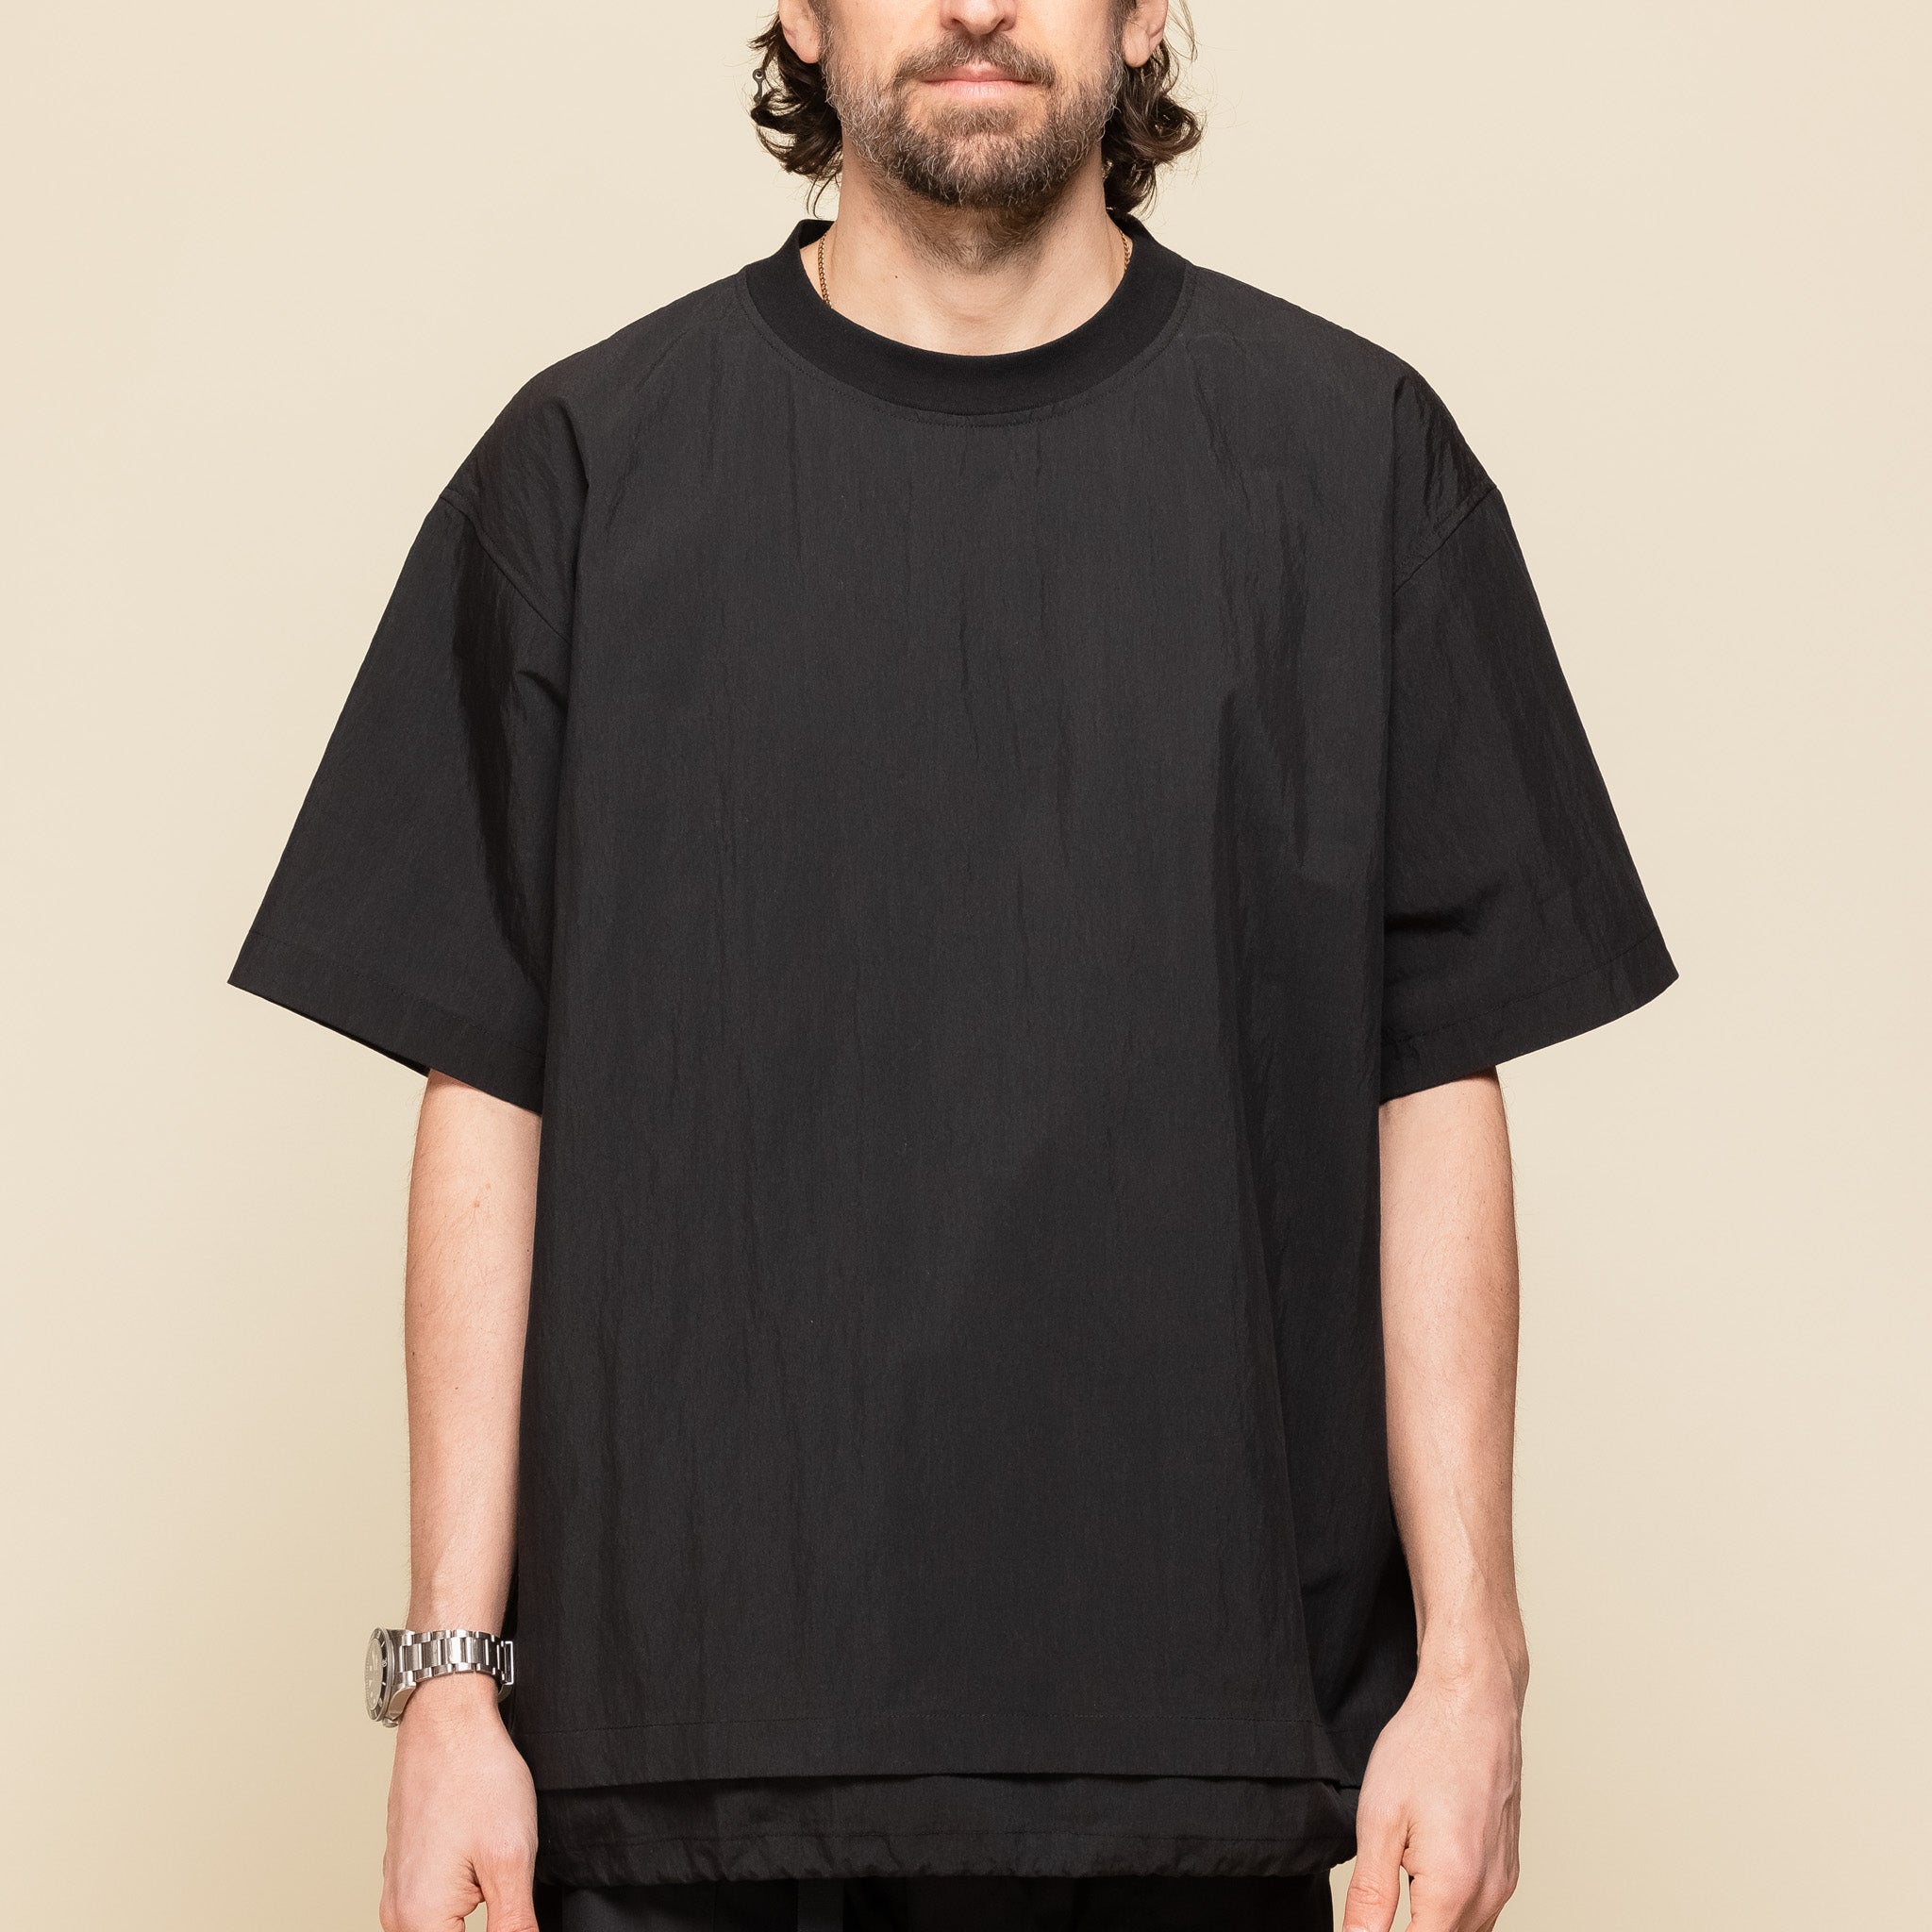 Poliquant - Deformed Windbreaker T-Shirt With Ventilation - Black "poliquant stockist" "poliquant website" "poliquant t-shirt"